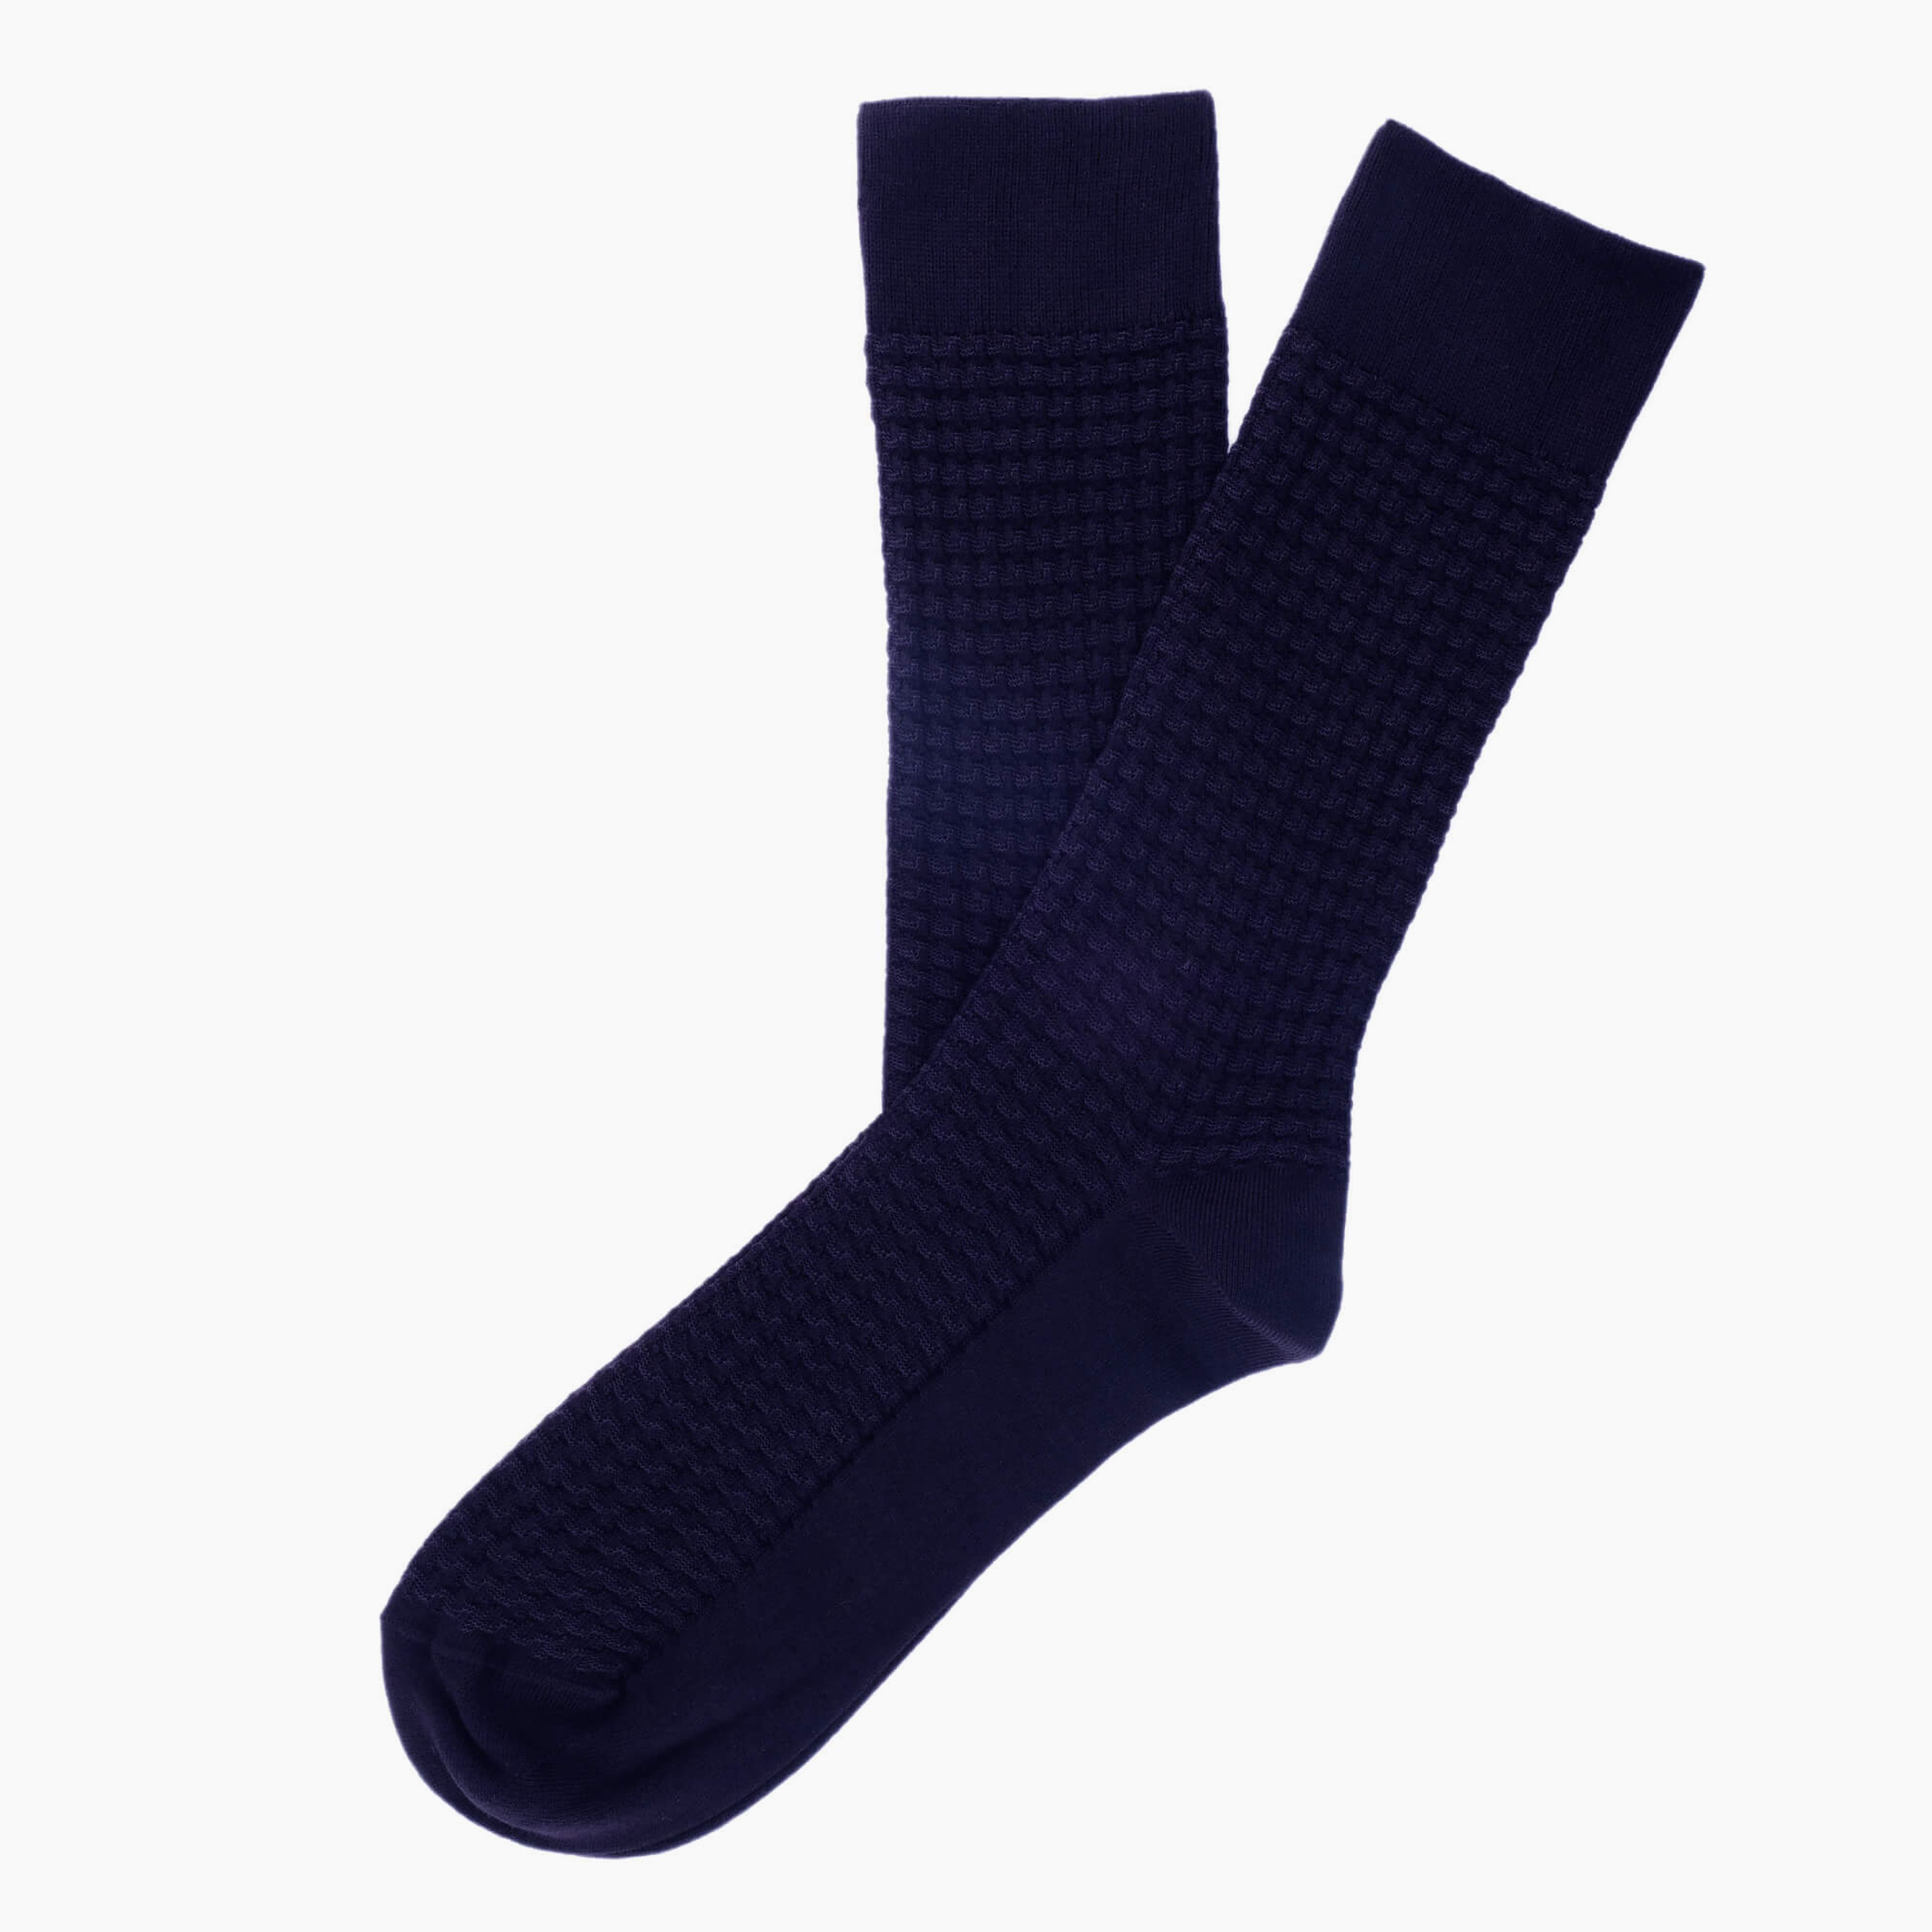 Hounds Waffle Textured Men's Socks - Blue